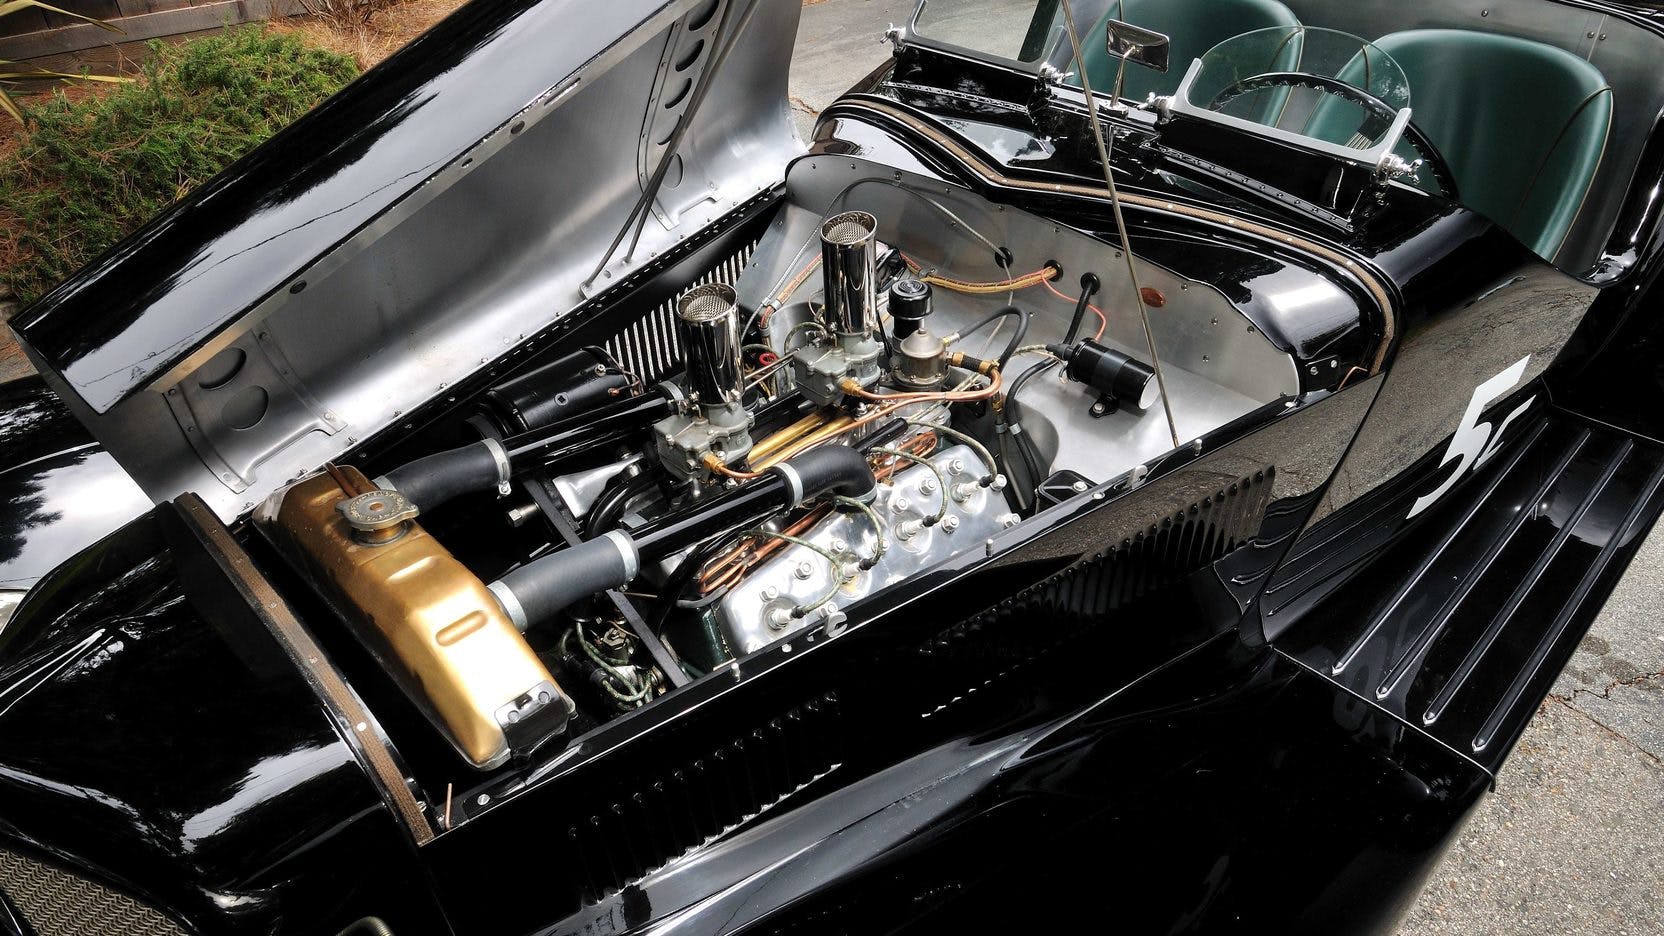 1933 Ford Auburn Special engine